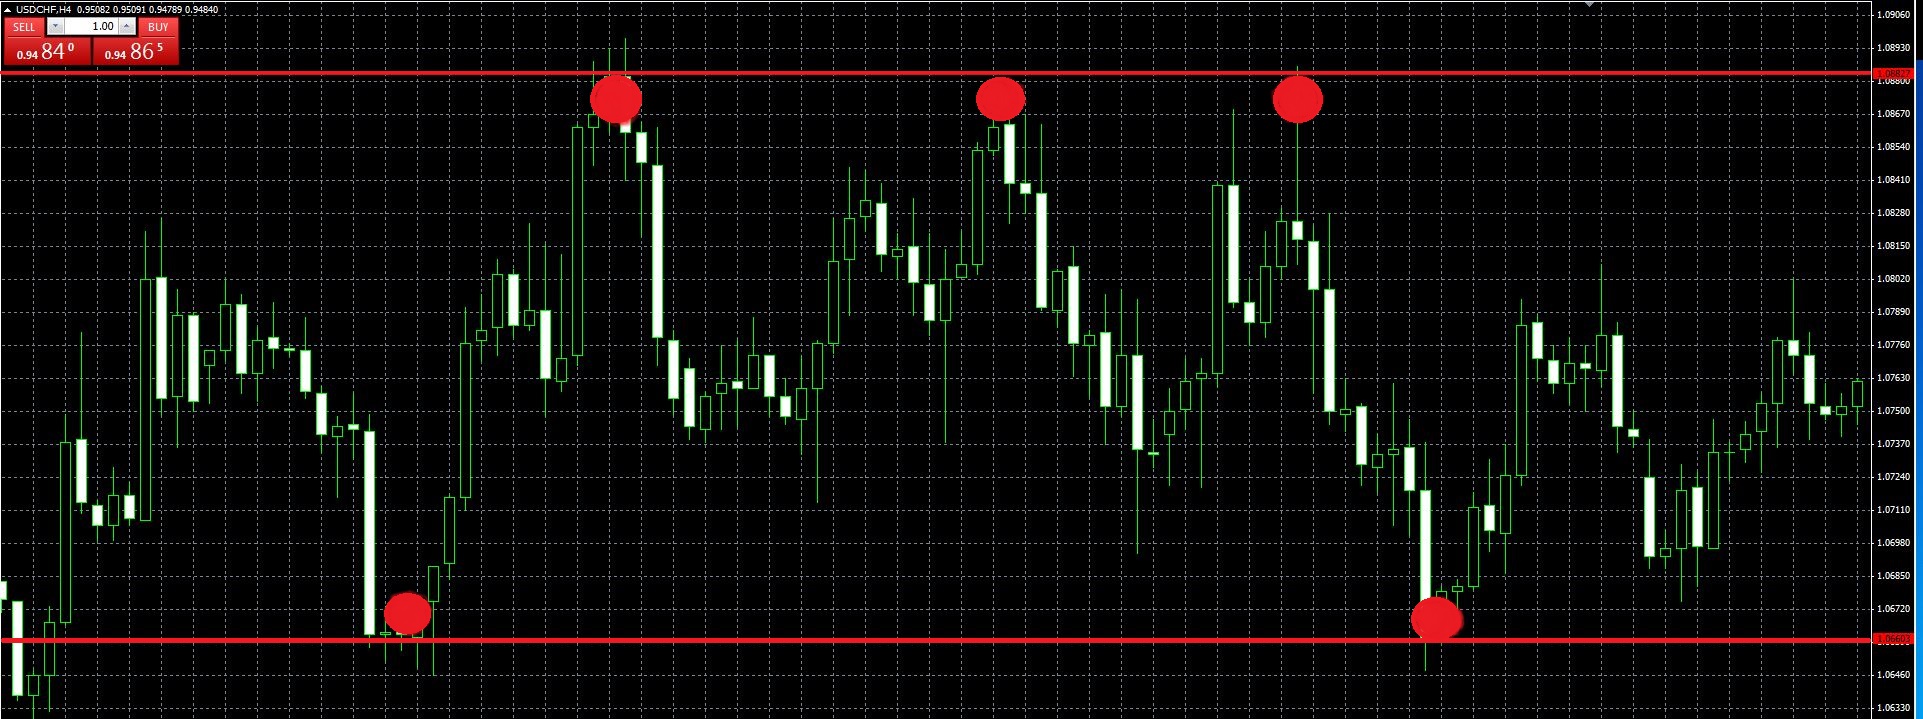 5 min binary options trading strategy pdf